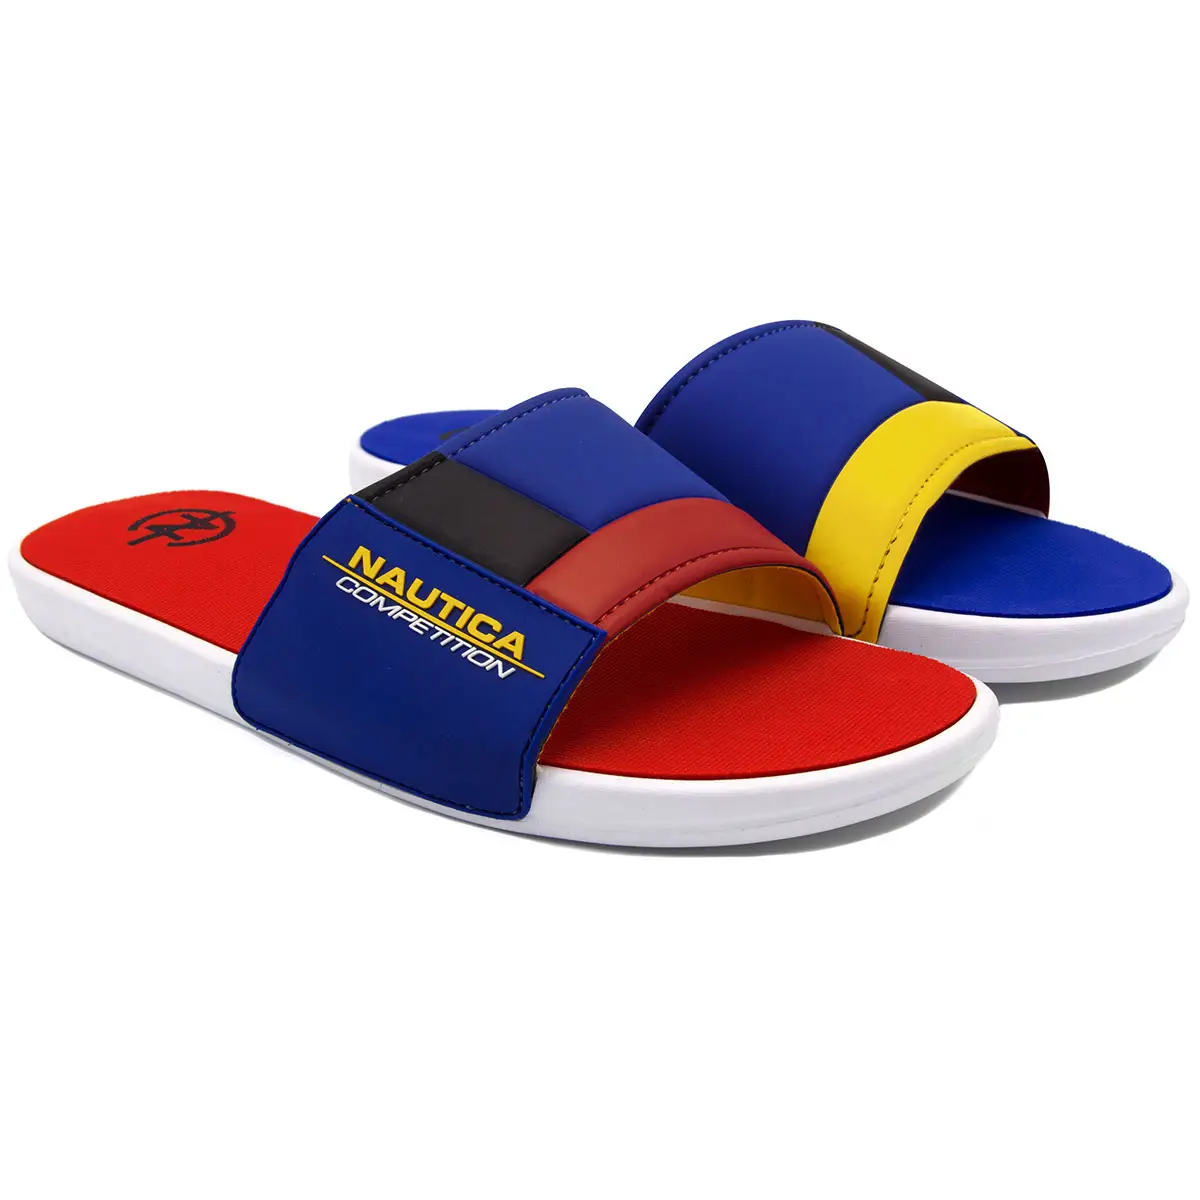 Nautica Men's Competition Slides Sandals